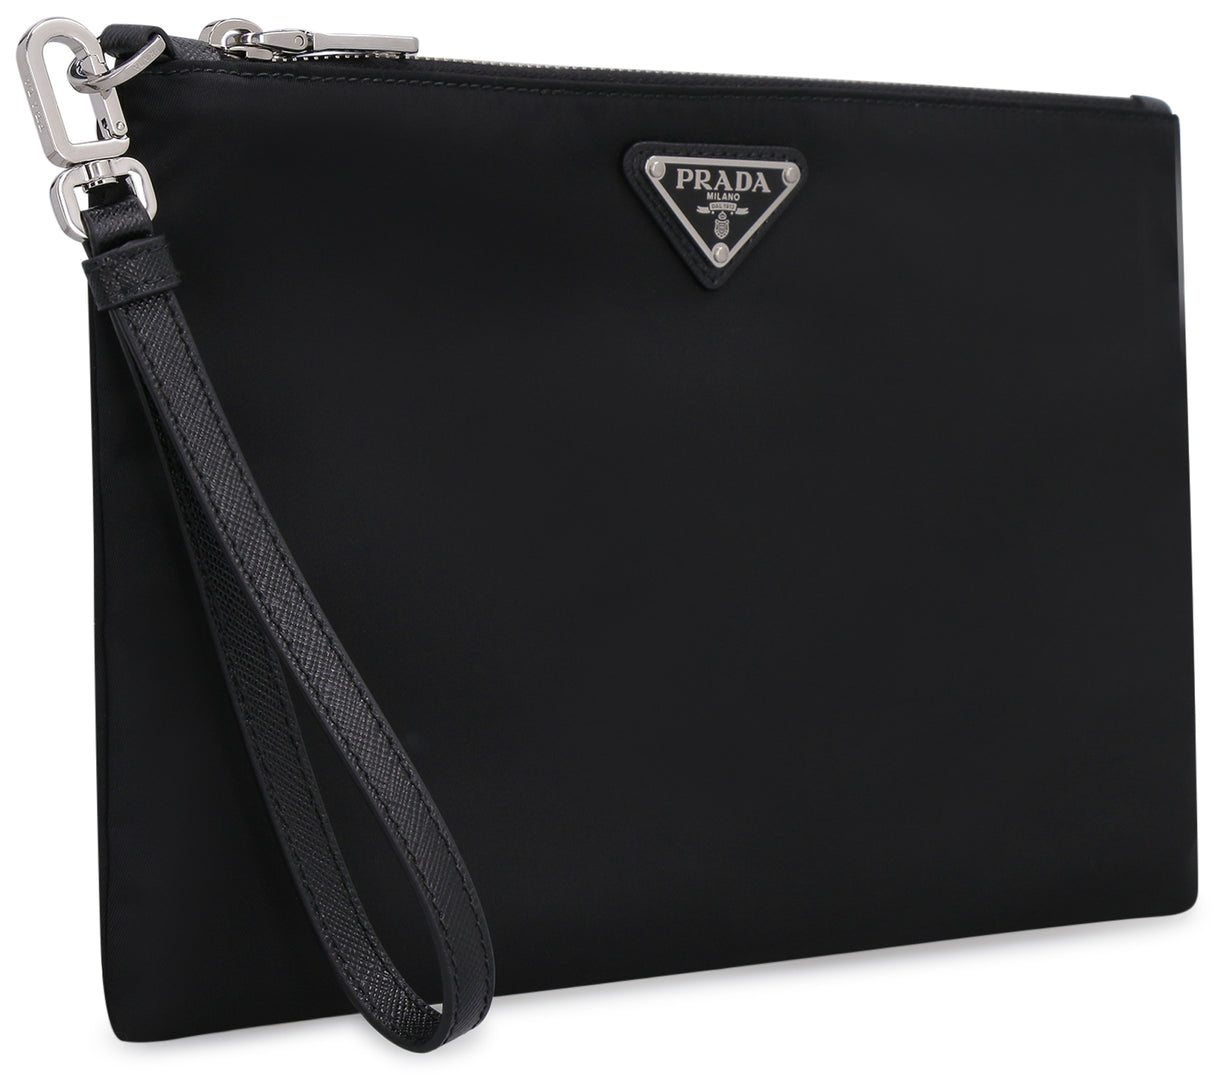 Eco-Friendly Black Nylon Flat Pouch Handbag for Men